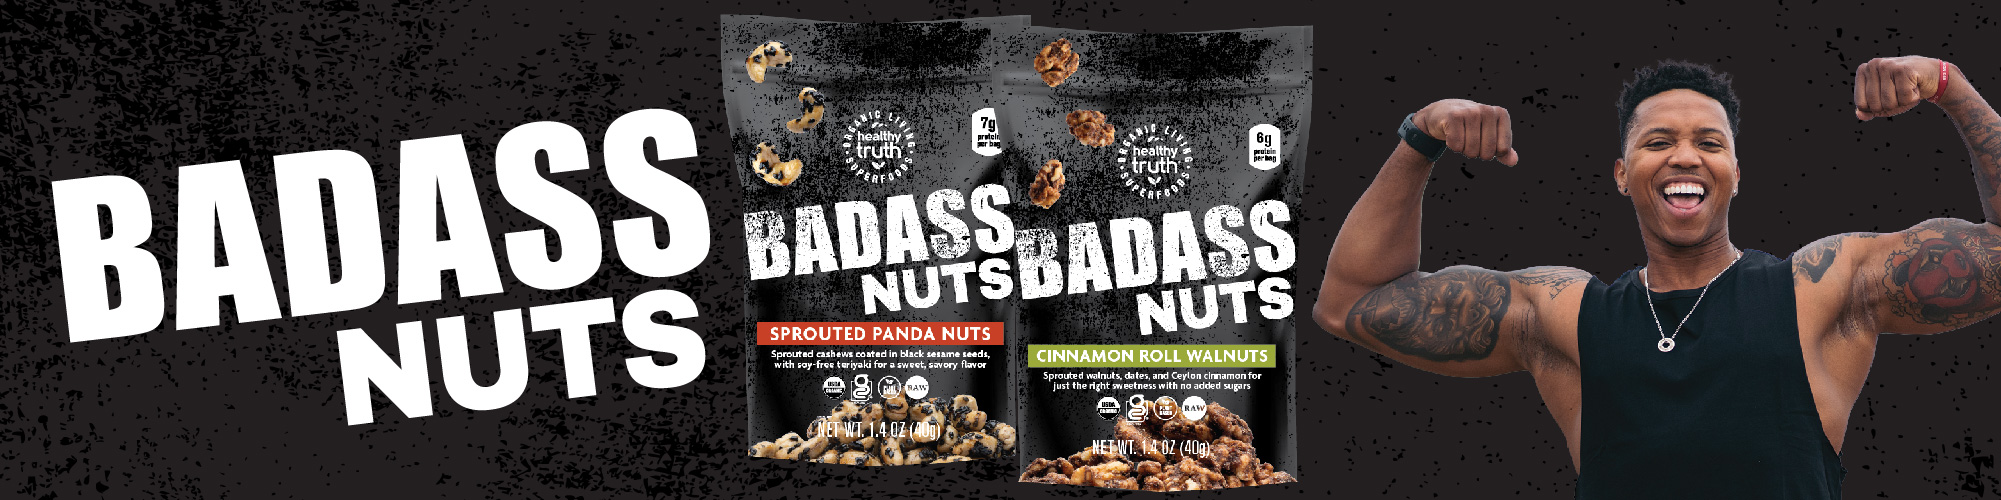 badass-nuts-launch-banner-2000x500